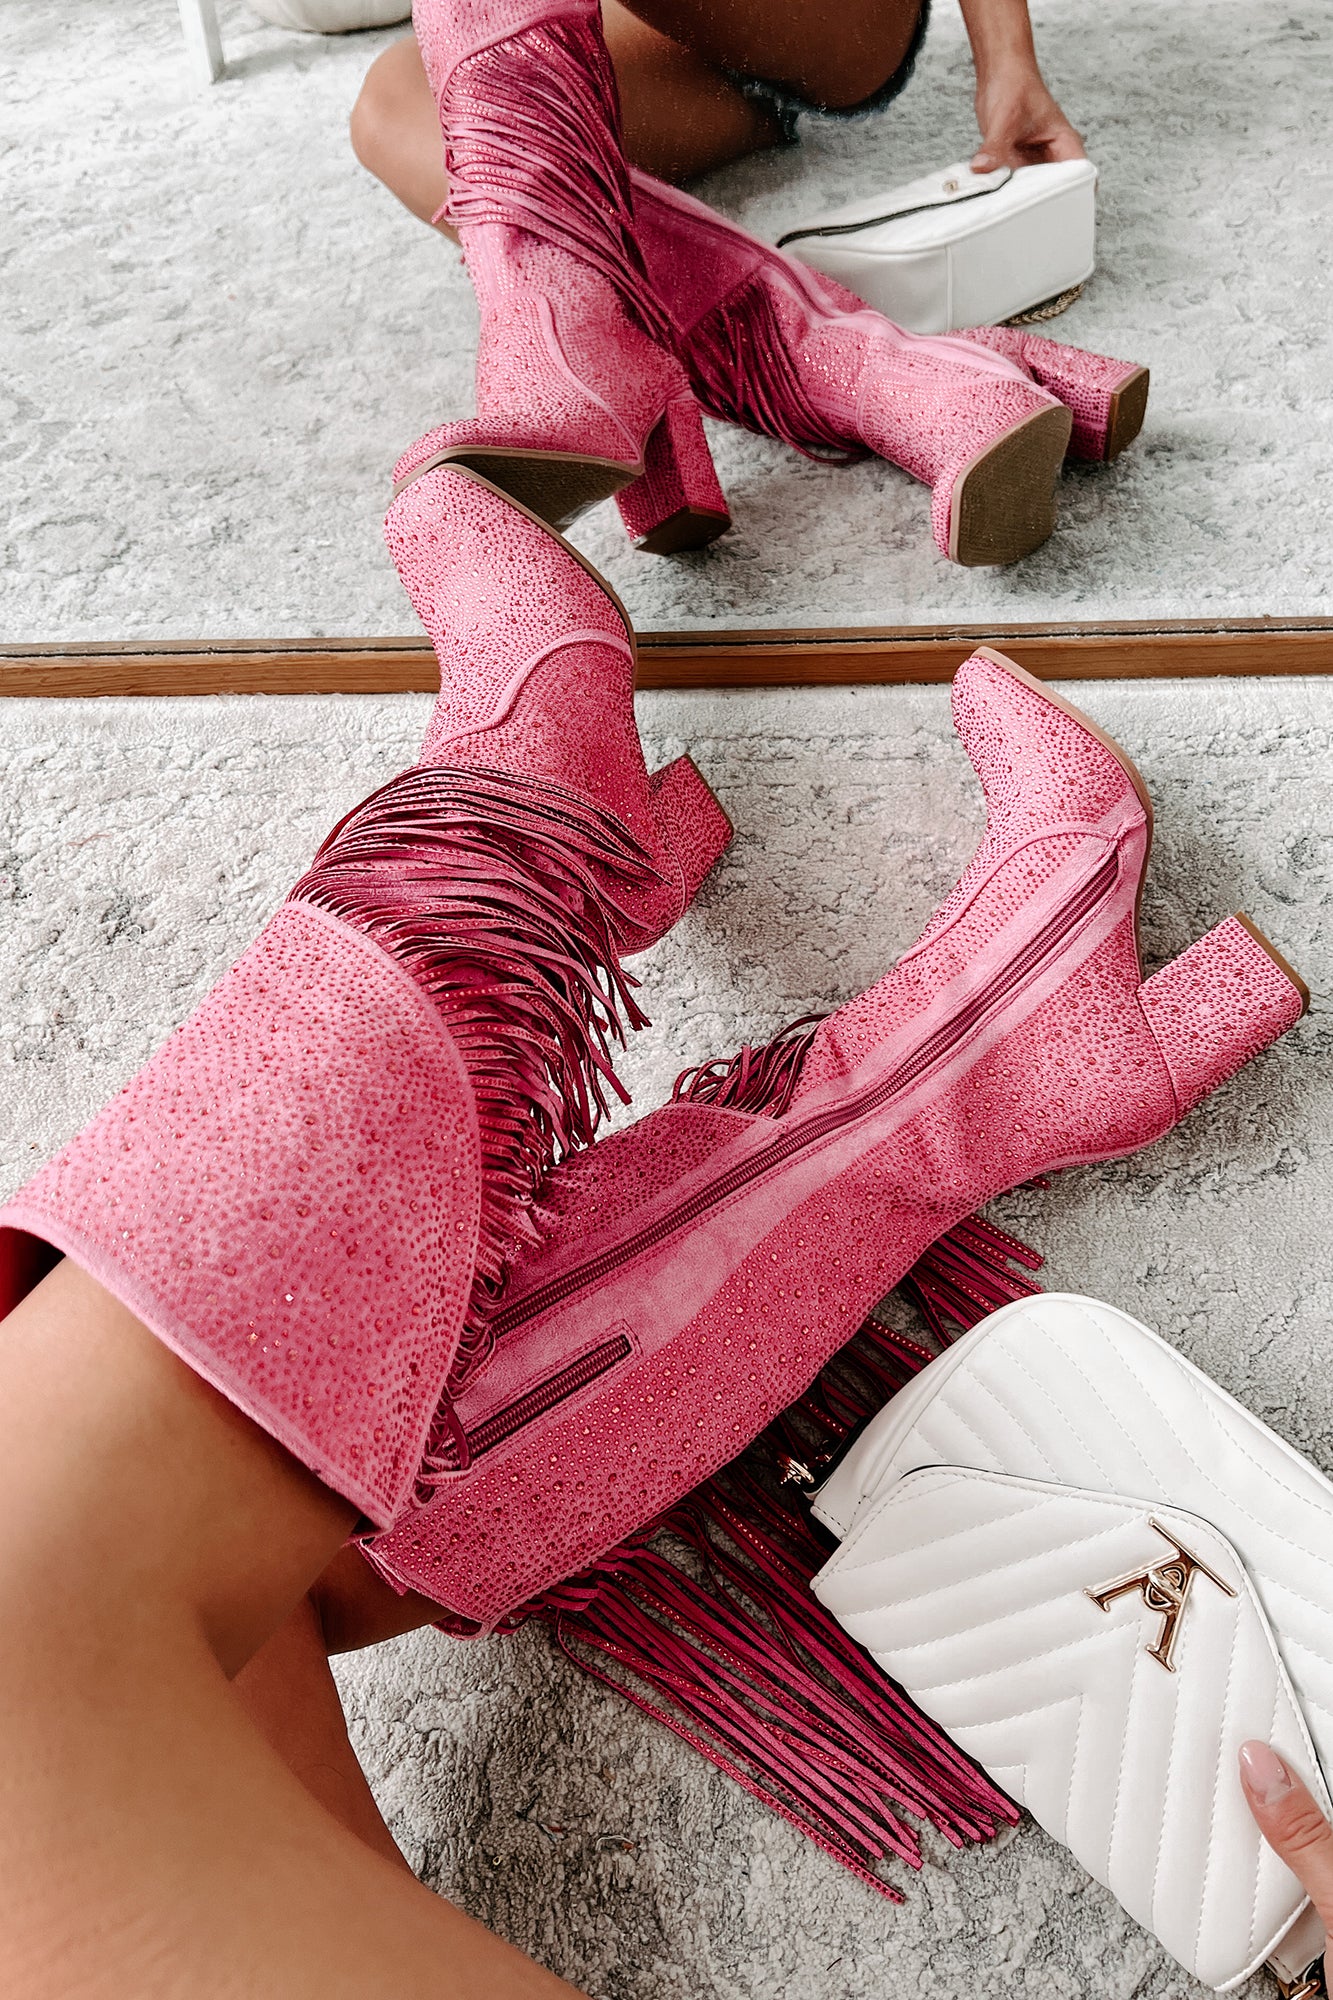 Pink Fringe Boots with Rhinestone Studs 11